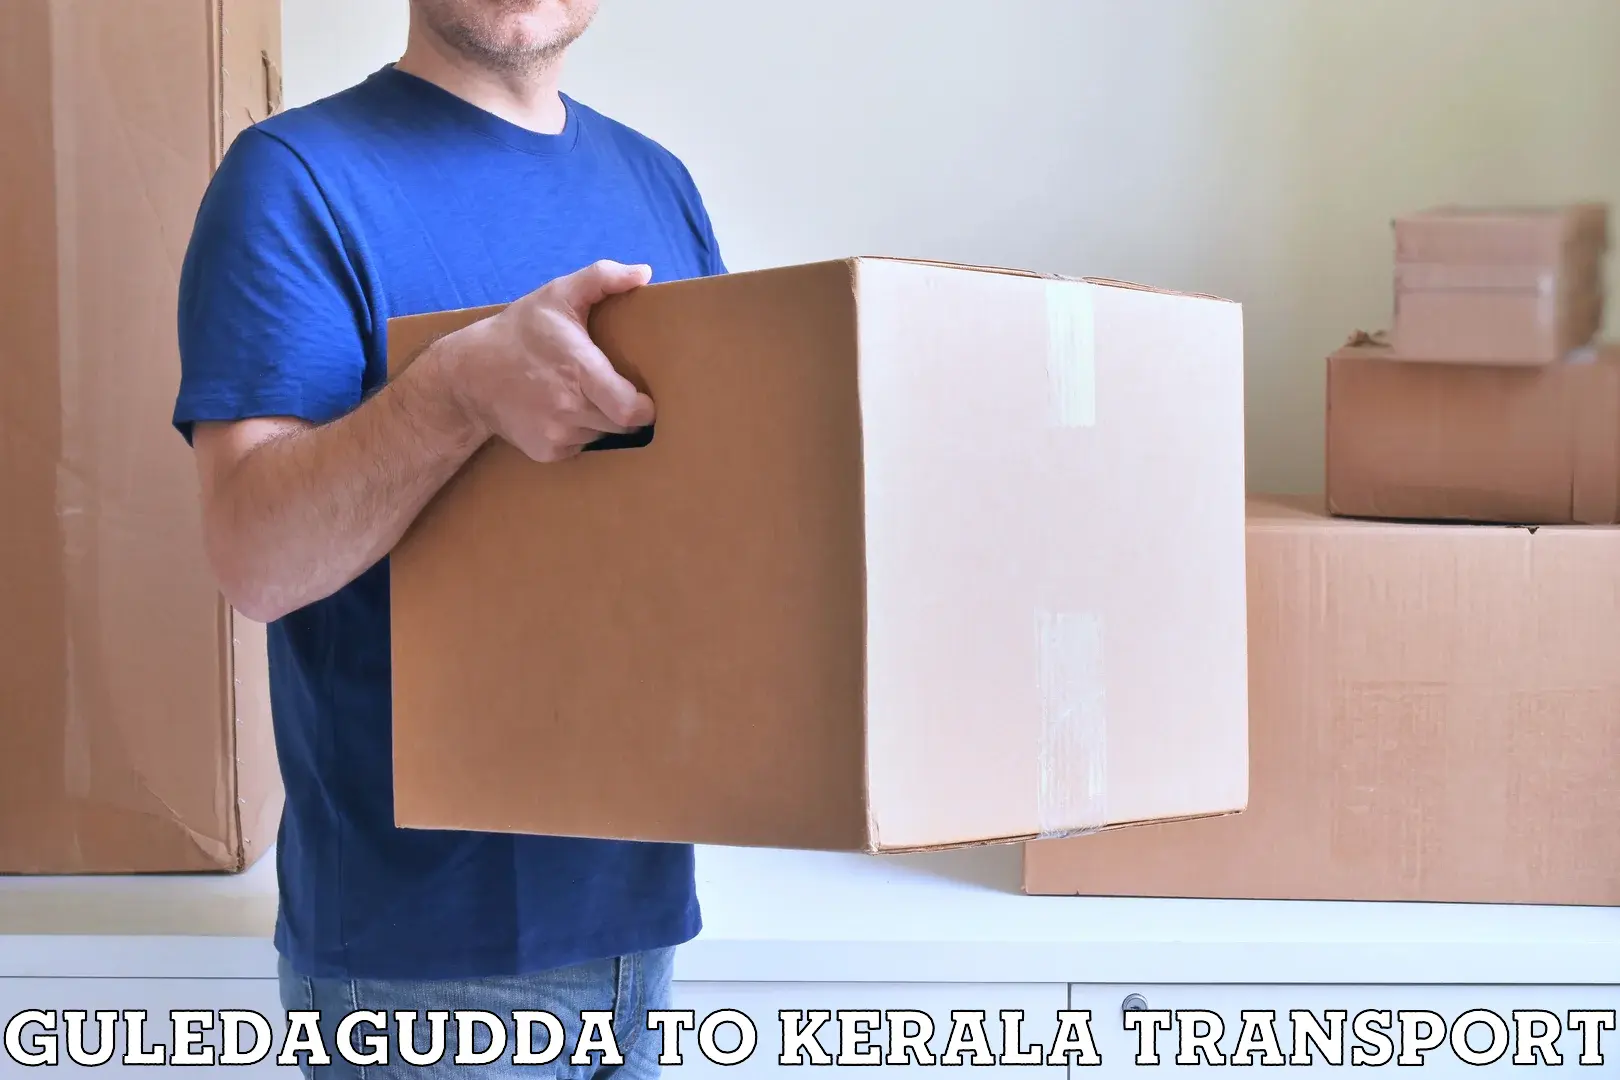 Online transport booking Guledagudda to Aluva